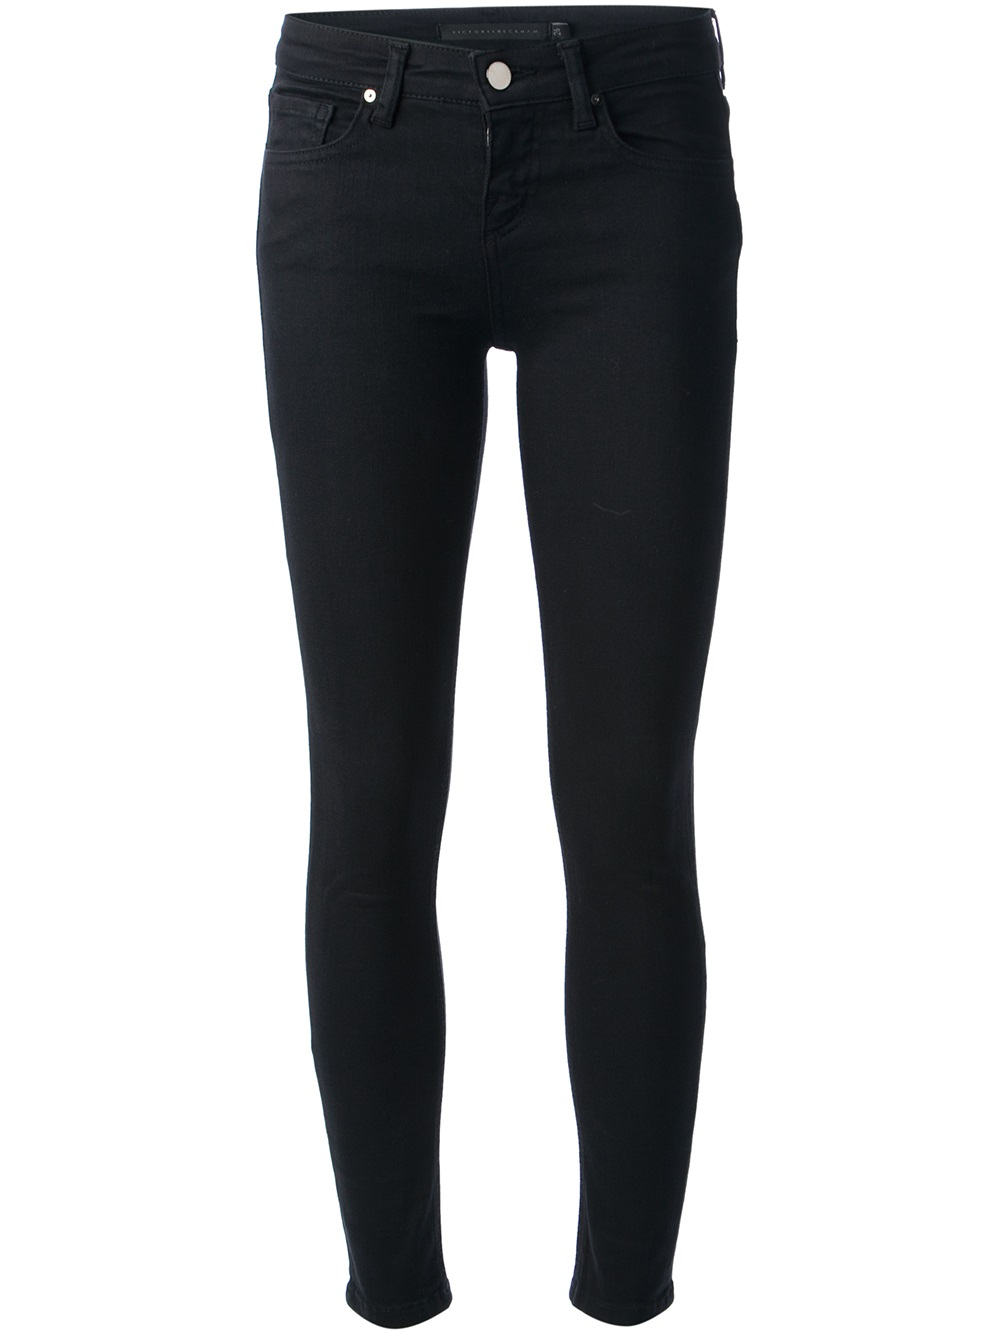 Lyst - Victoria beckham Power Skinny Jean in Black